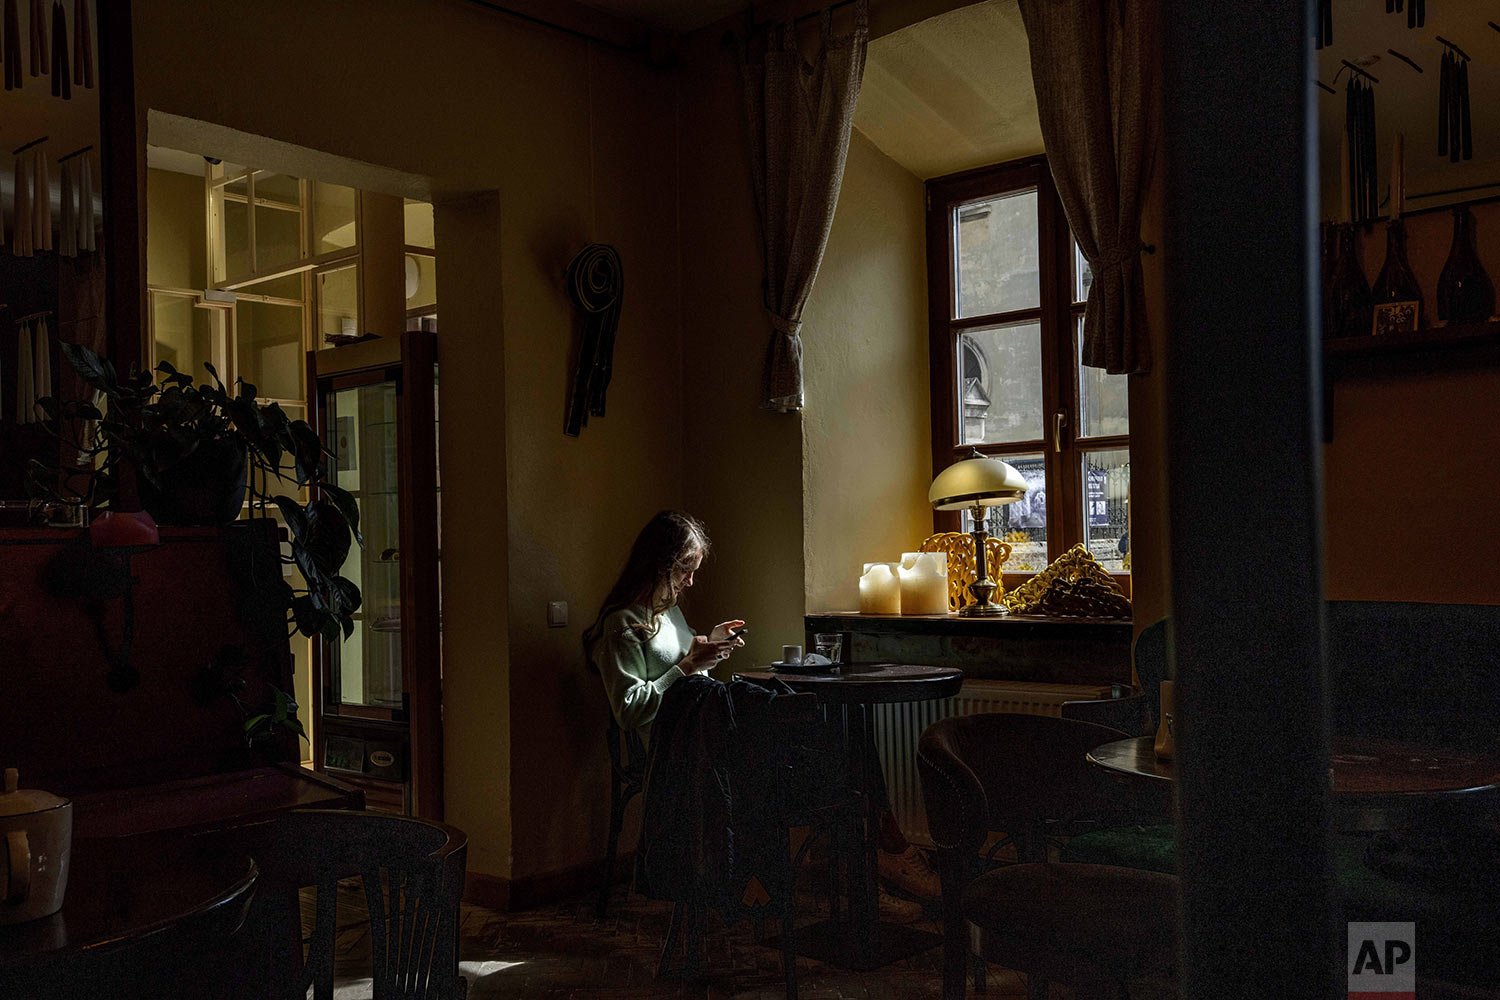  A woman sits inside a coffee shop in Lviv, western Ukraine, Sunday, March 27, 2022. (AP Photo/Nariman El-Mofty) 